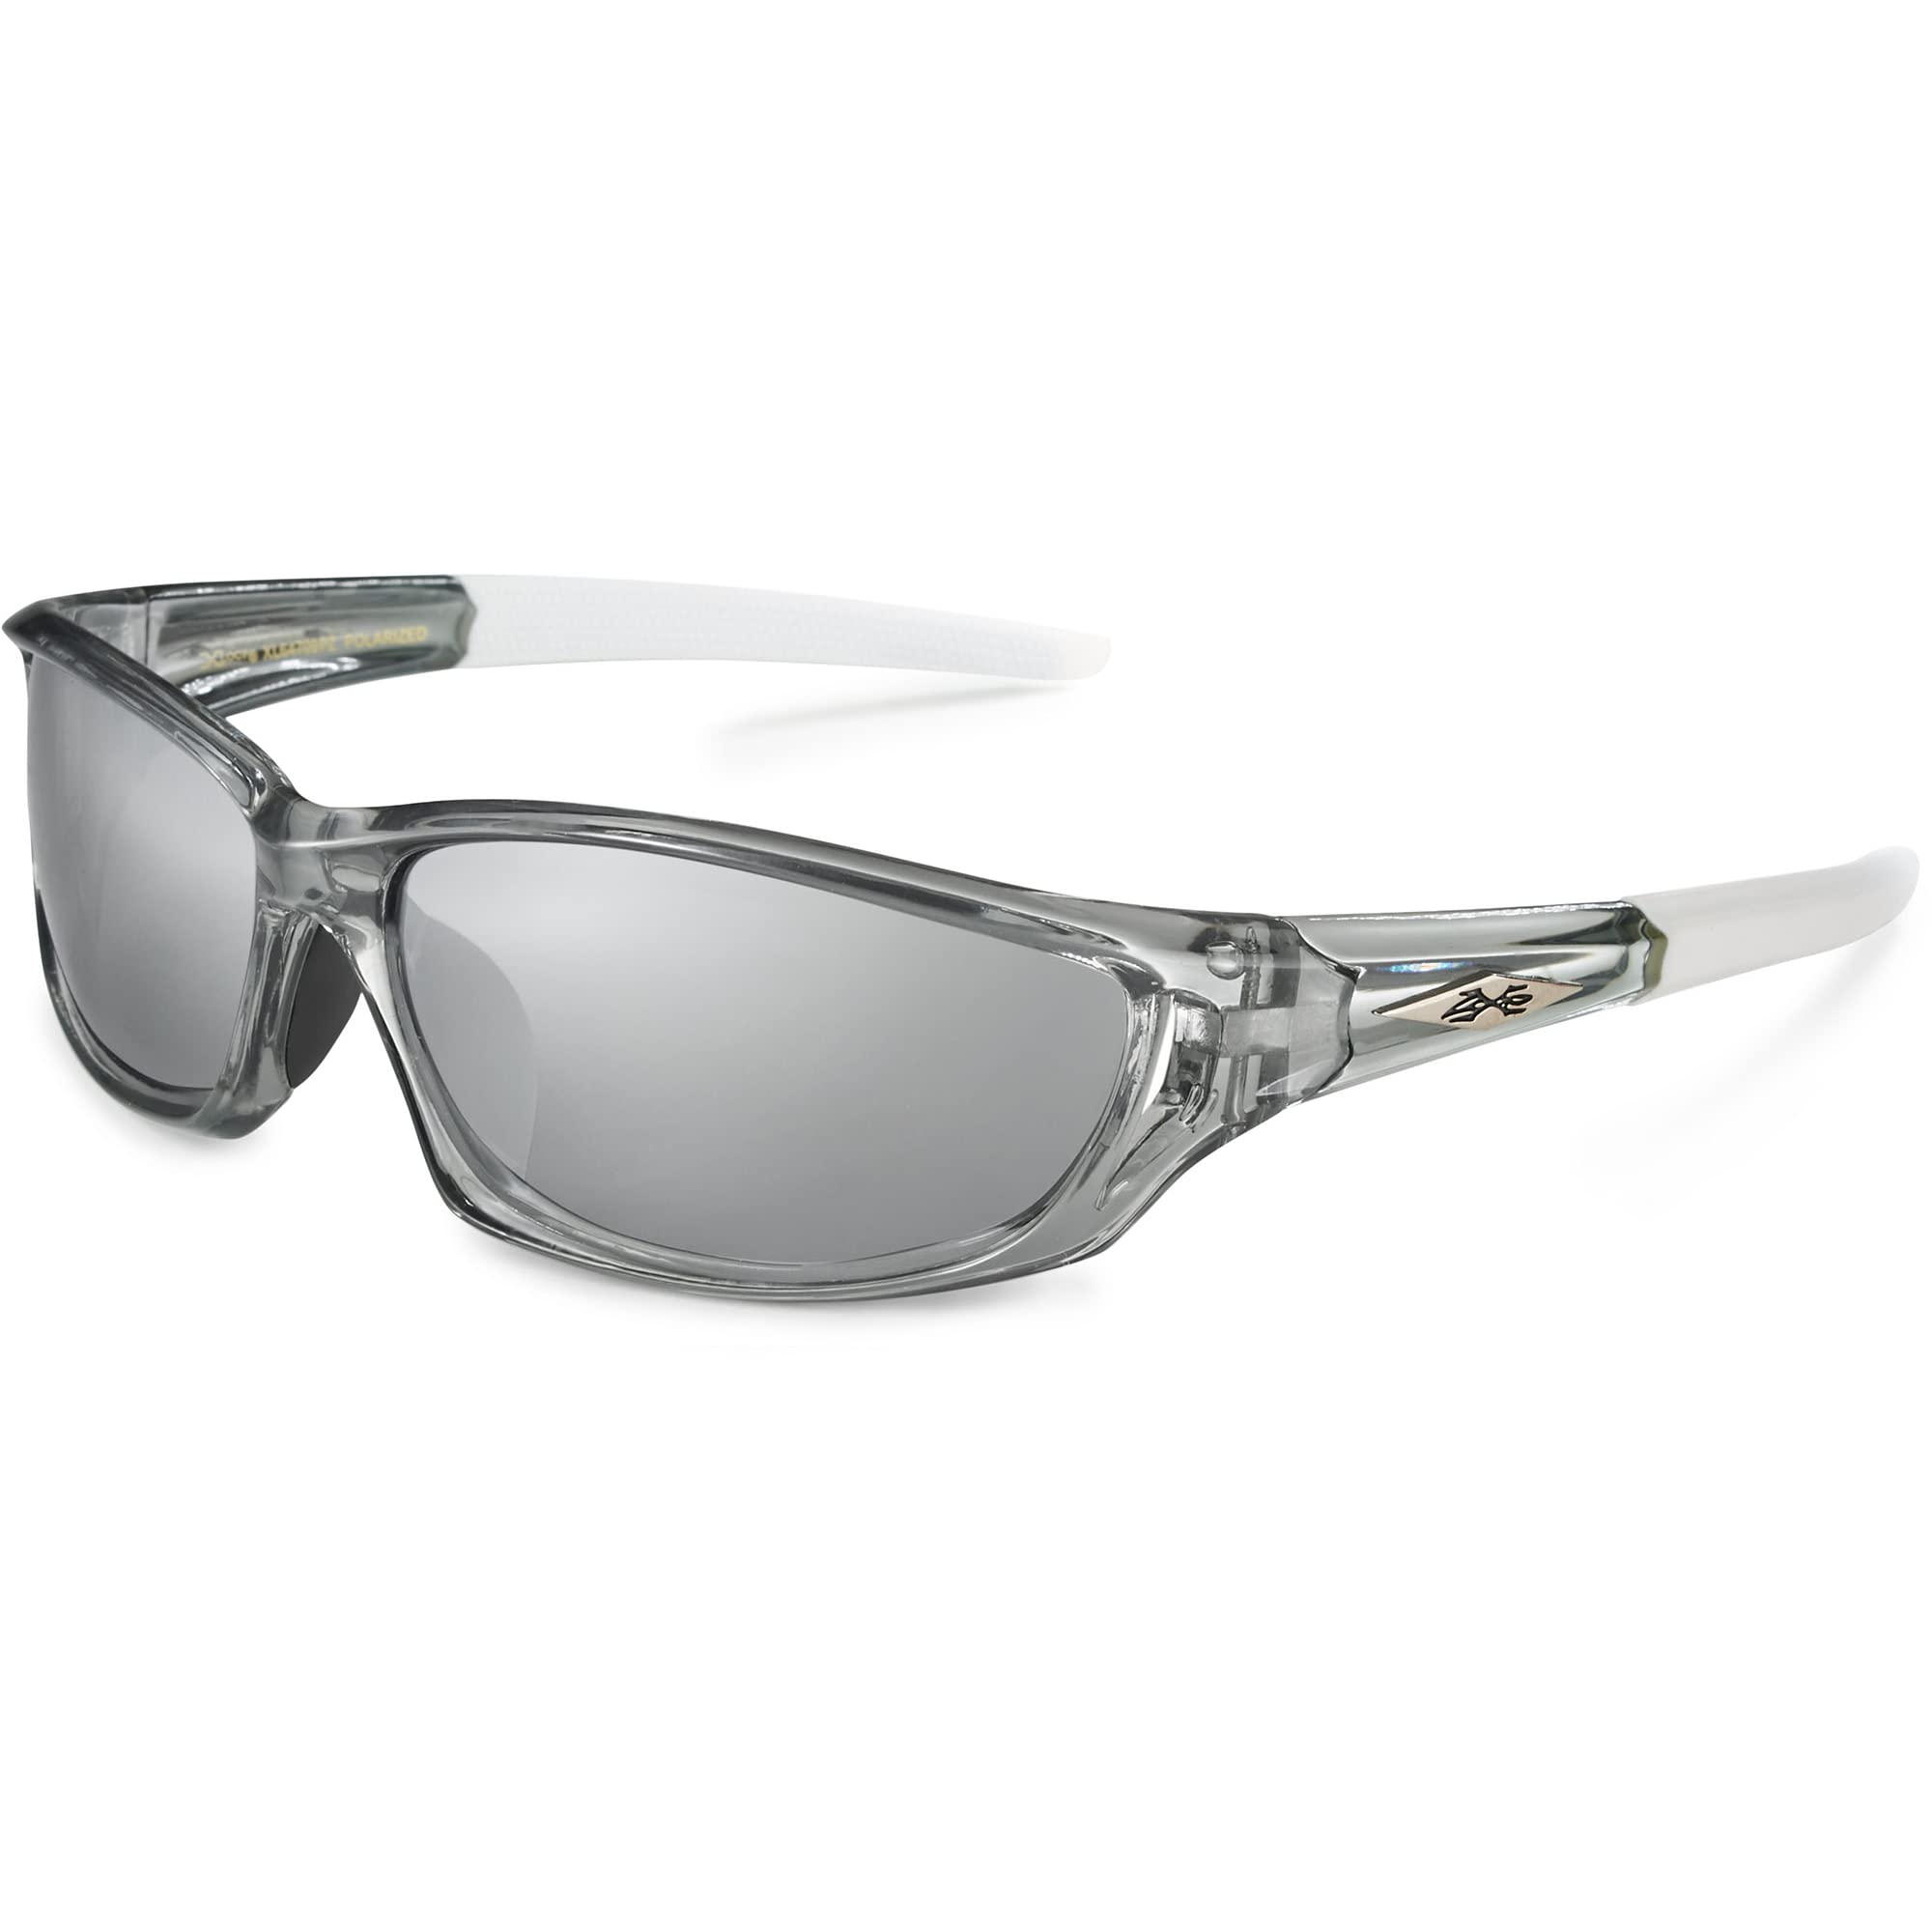 X LOOP Polarized Sports Sunglasses for Men UV400 Wrap Around